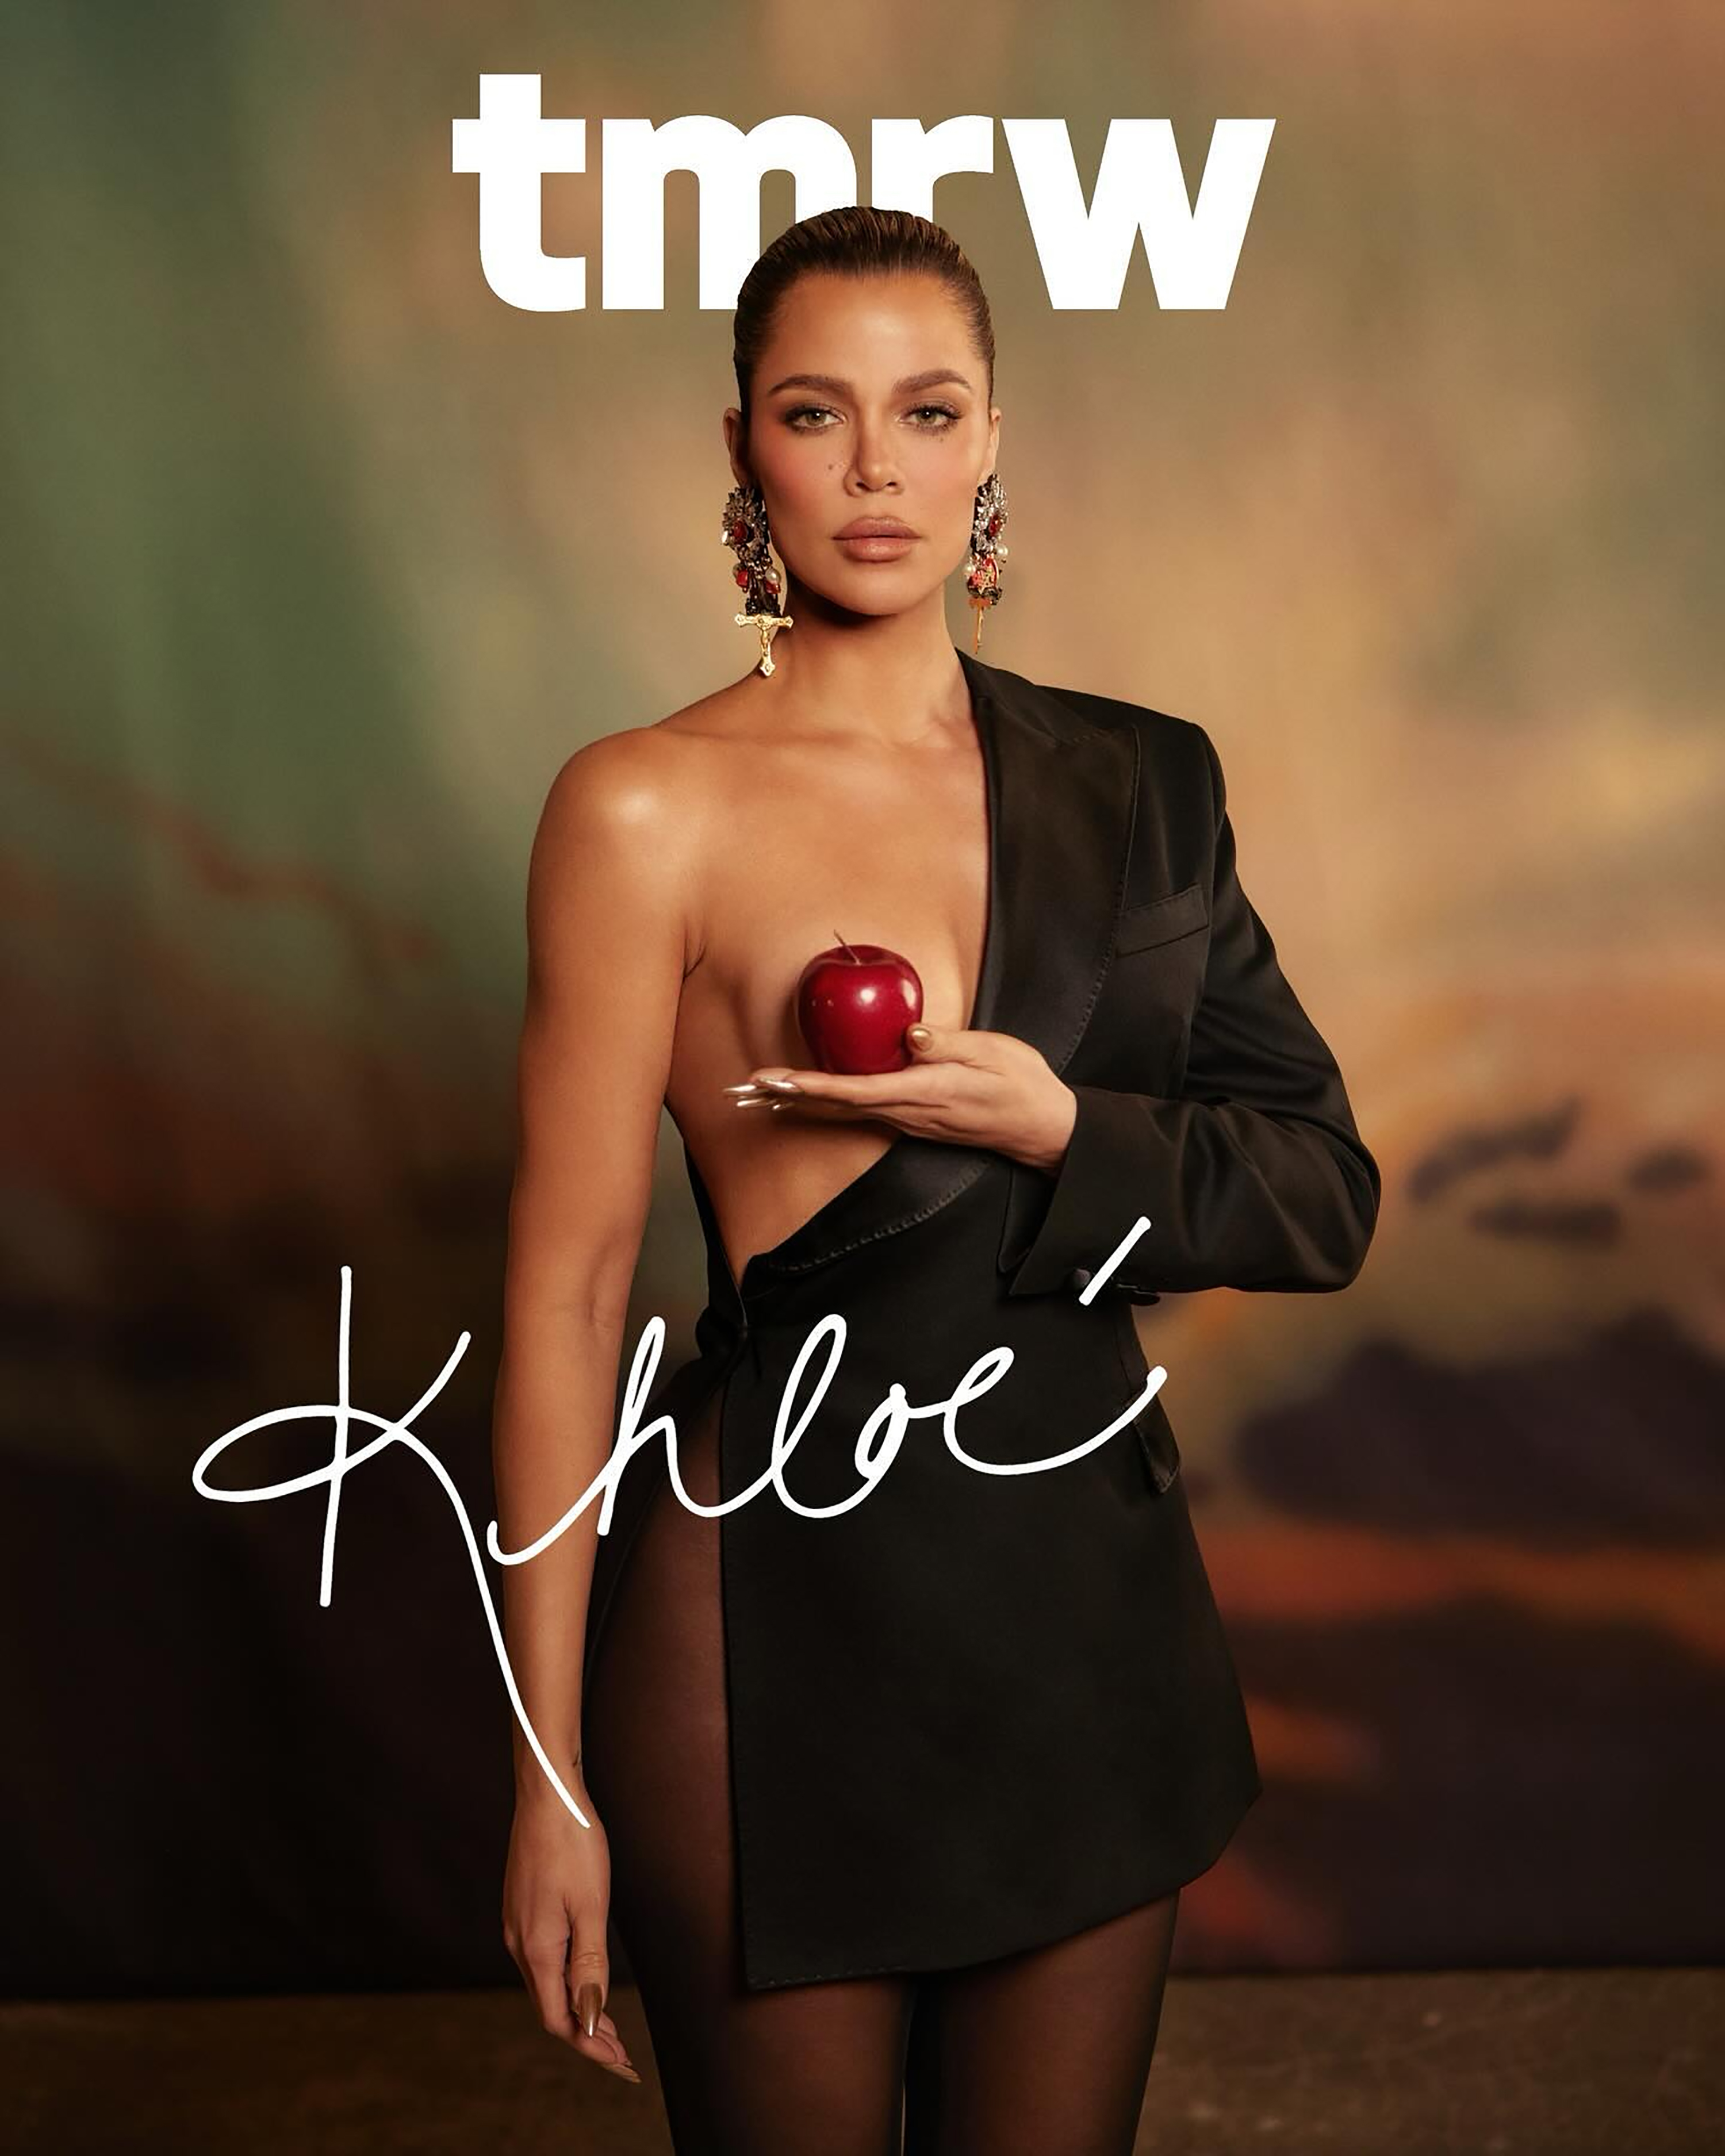 Scott commented on Khloe's sexy cover photo for tmrw magazine